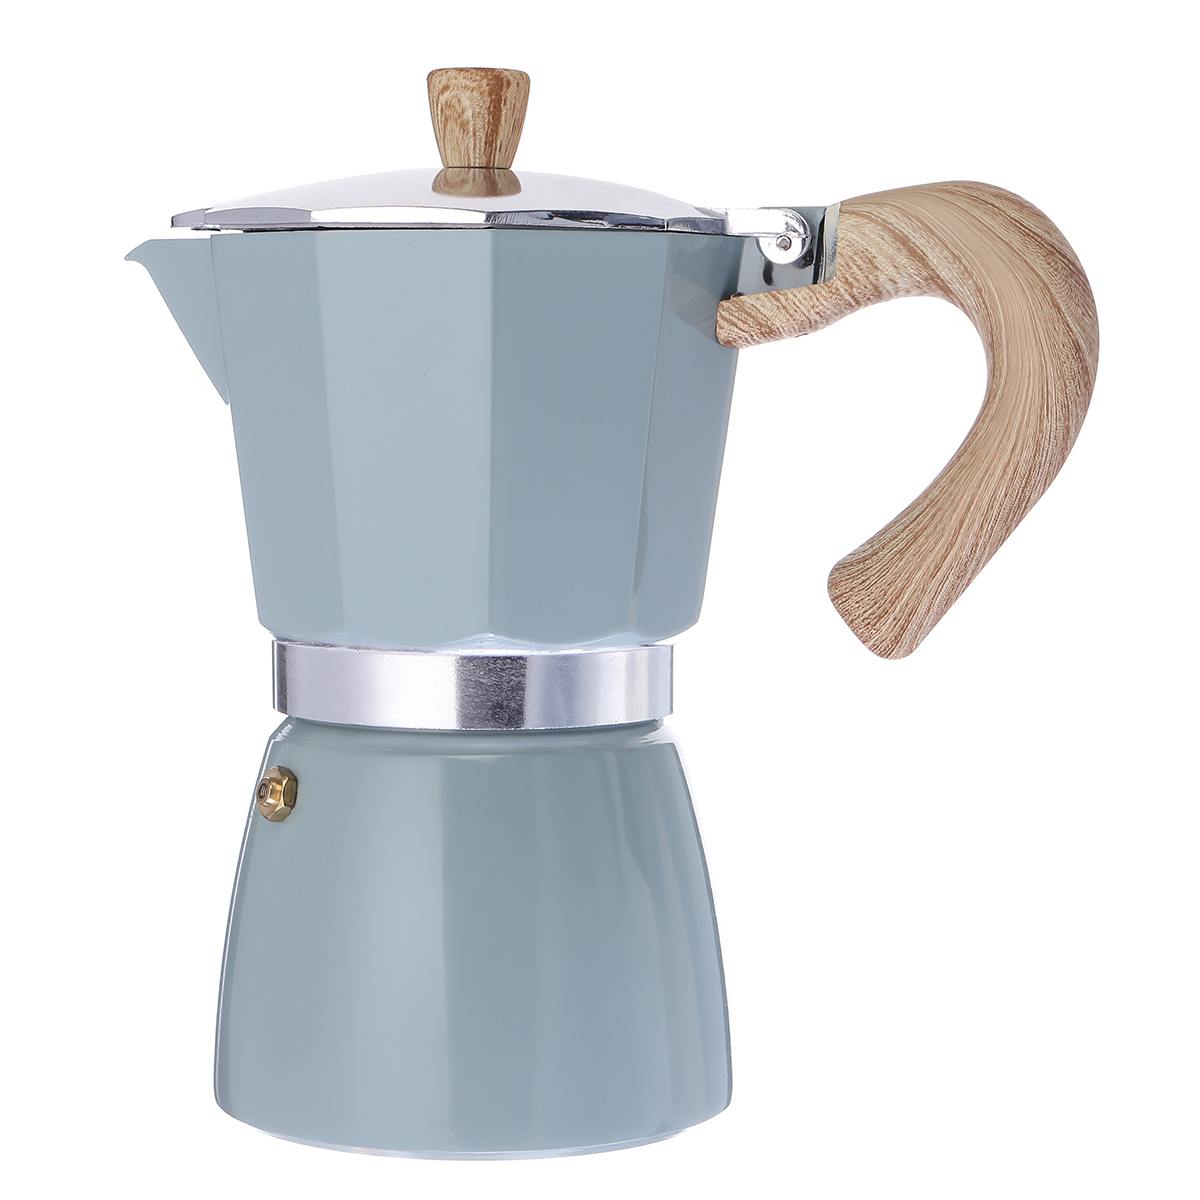 150ml 300ml kaffemaskine aluminium mokka espresso percolator pot kaffemaskine moka pot stovetop kaffemaskine: 150ml blå